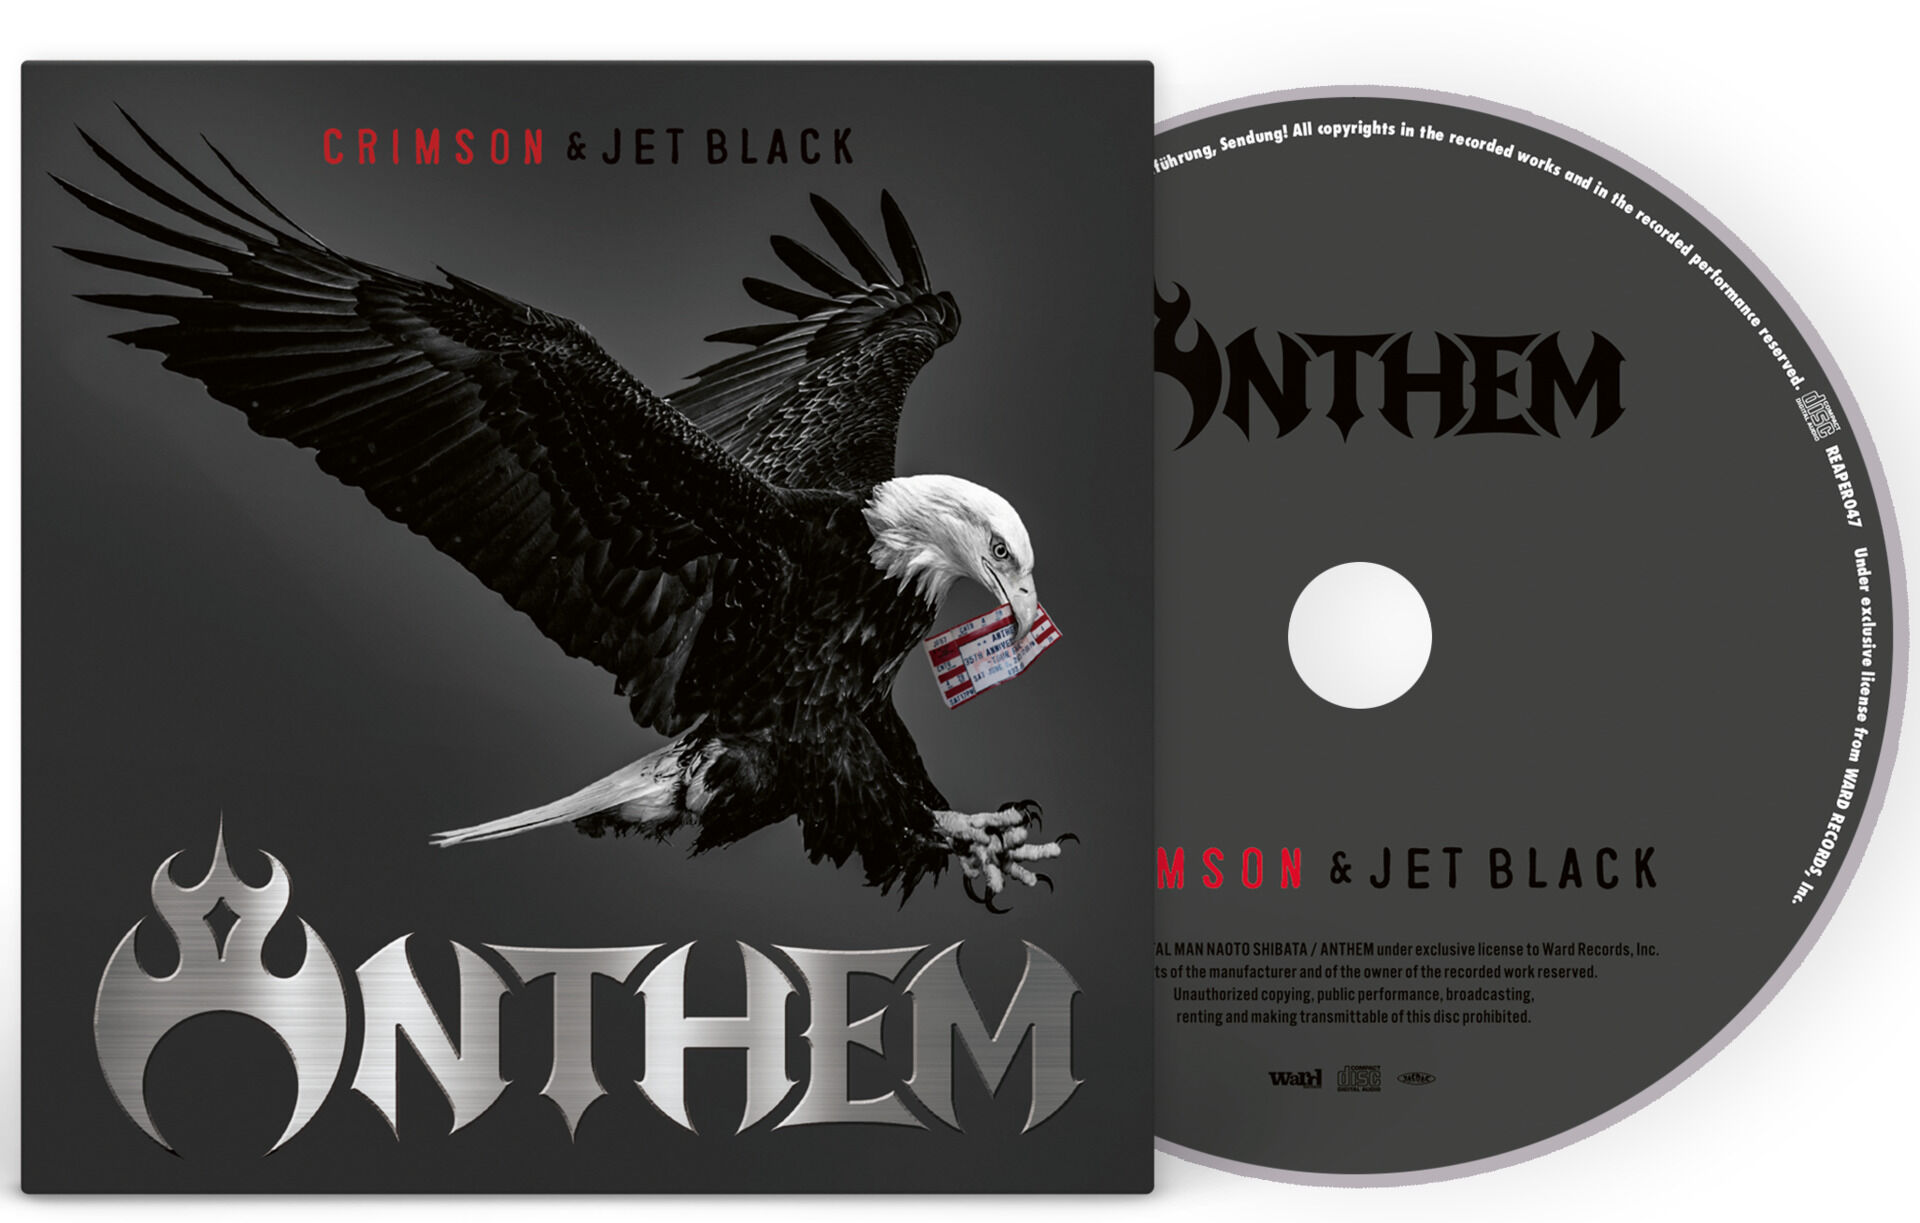 ANTHEM - Crimson & Jet Black [CD]